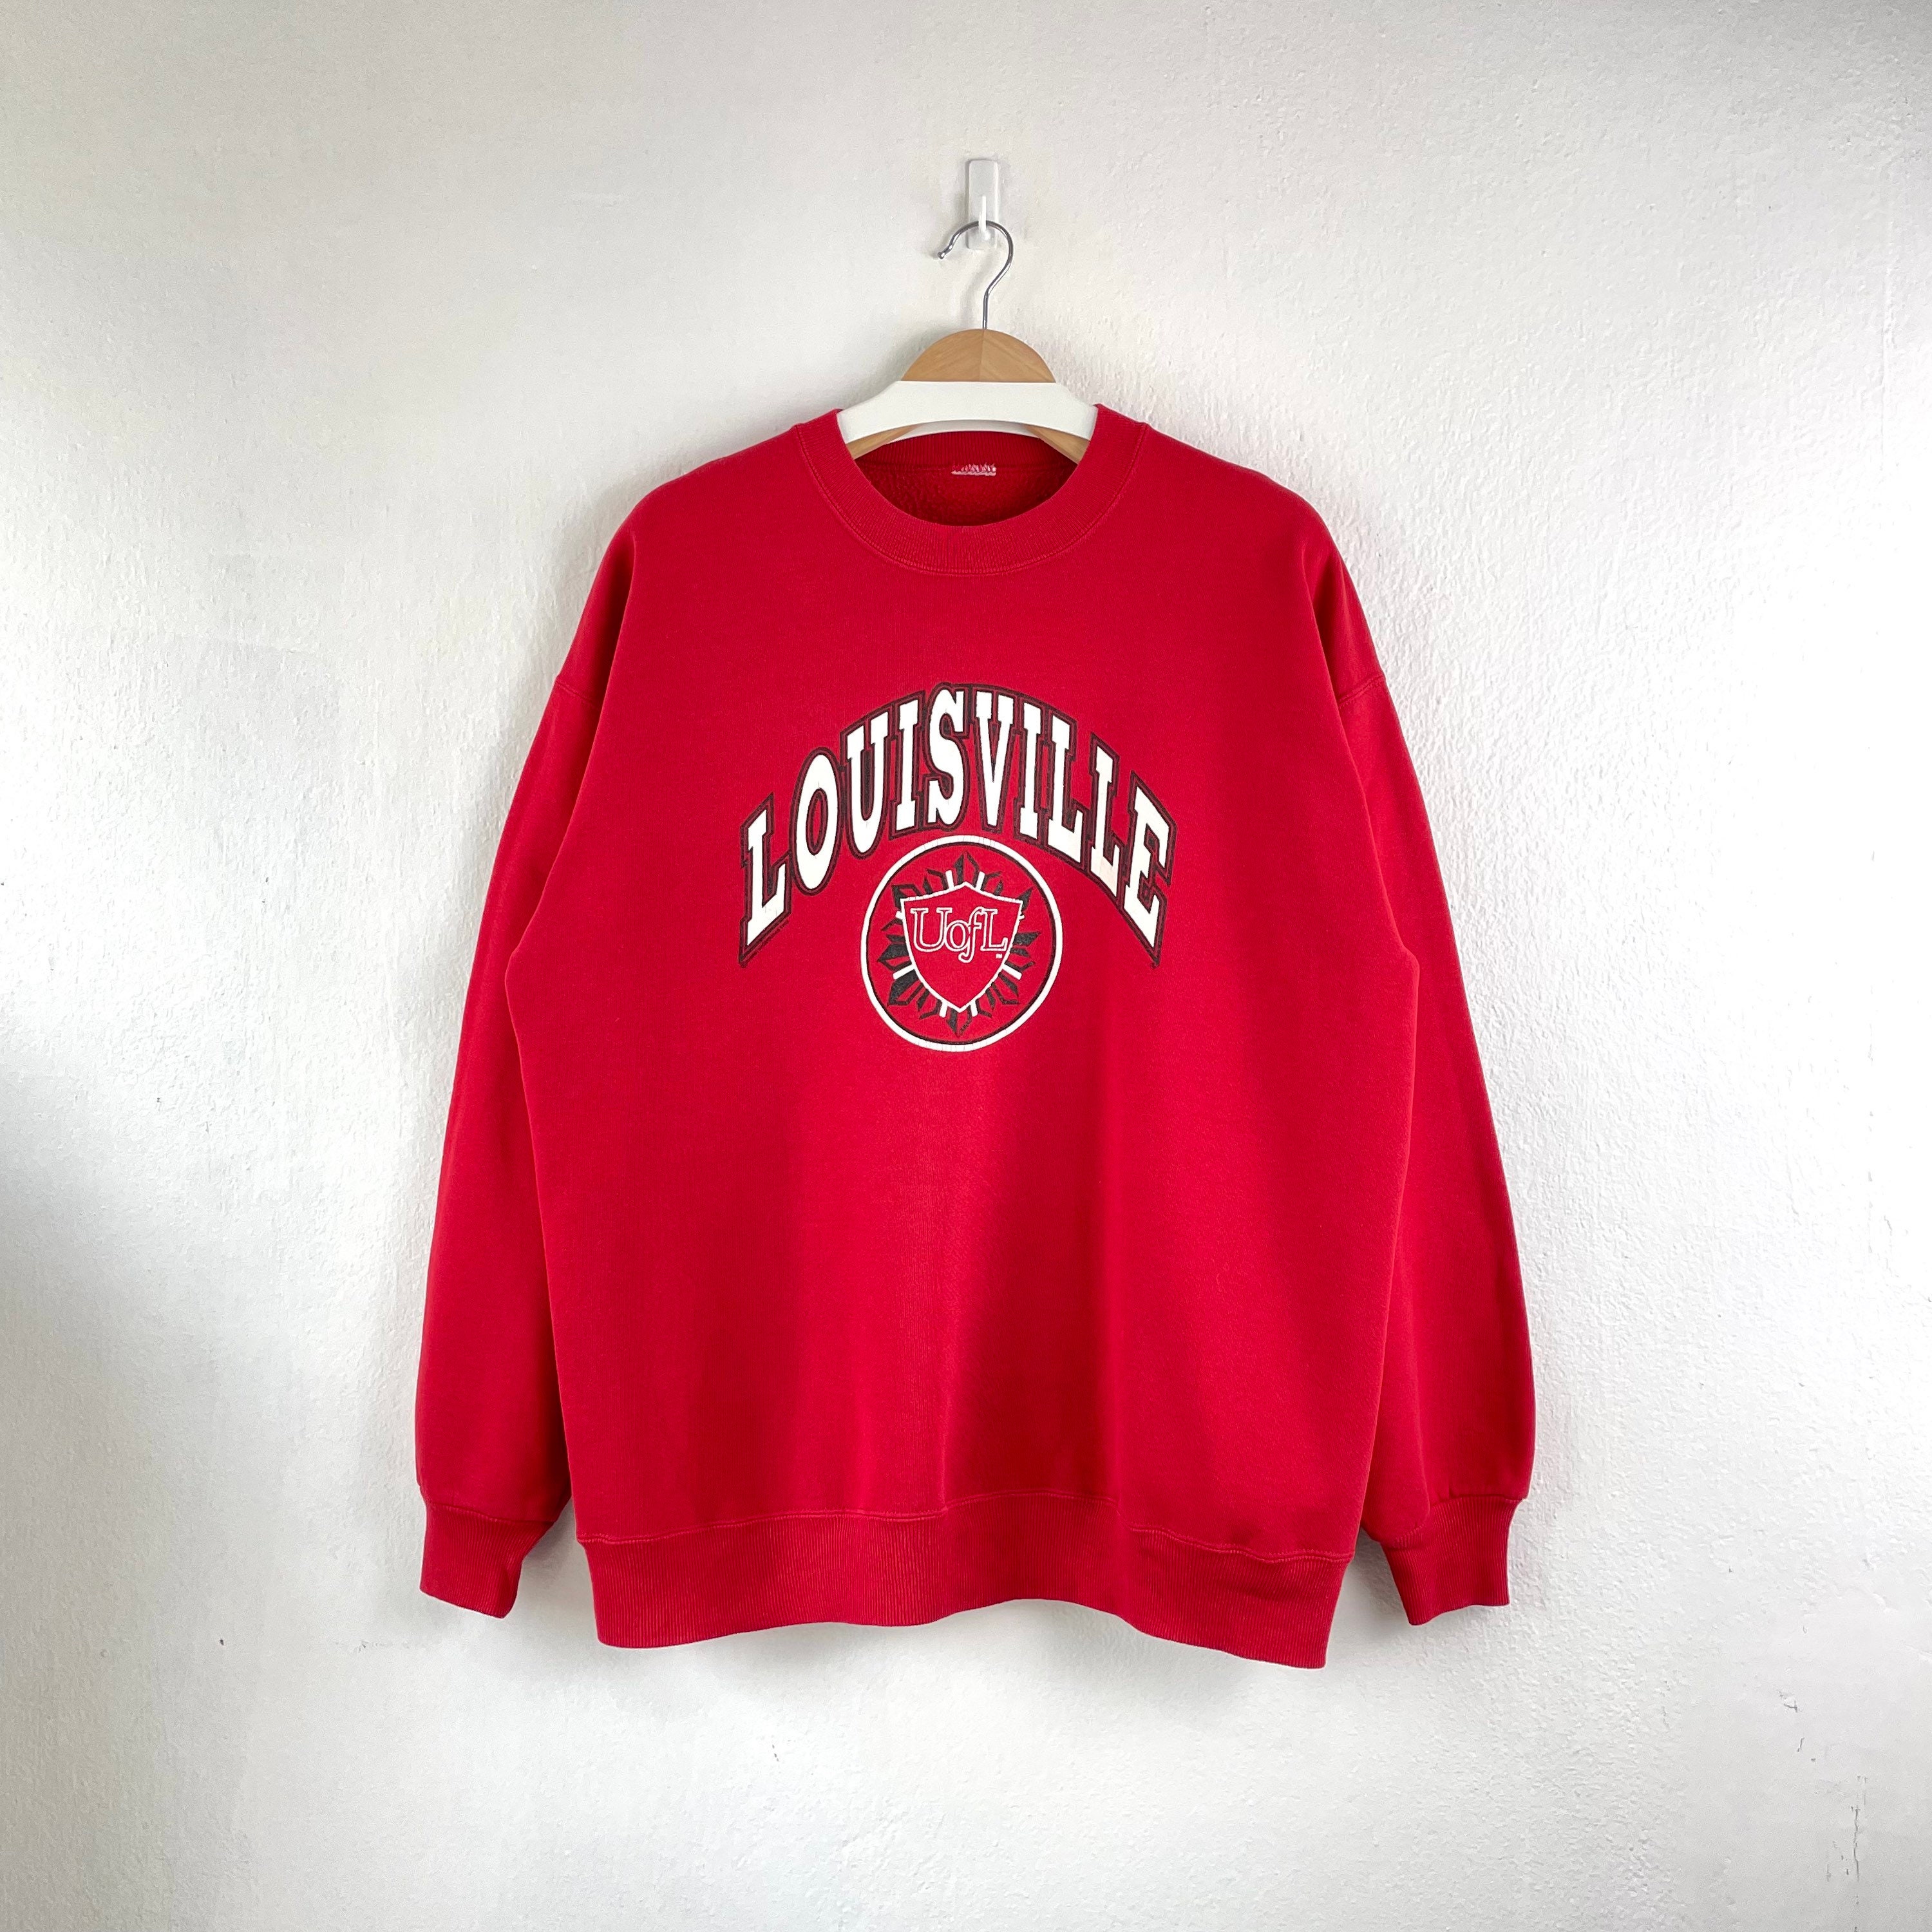 Vintage 1993 University of Louisville Crewneck Sweatshirt 